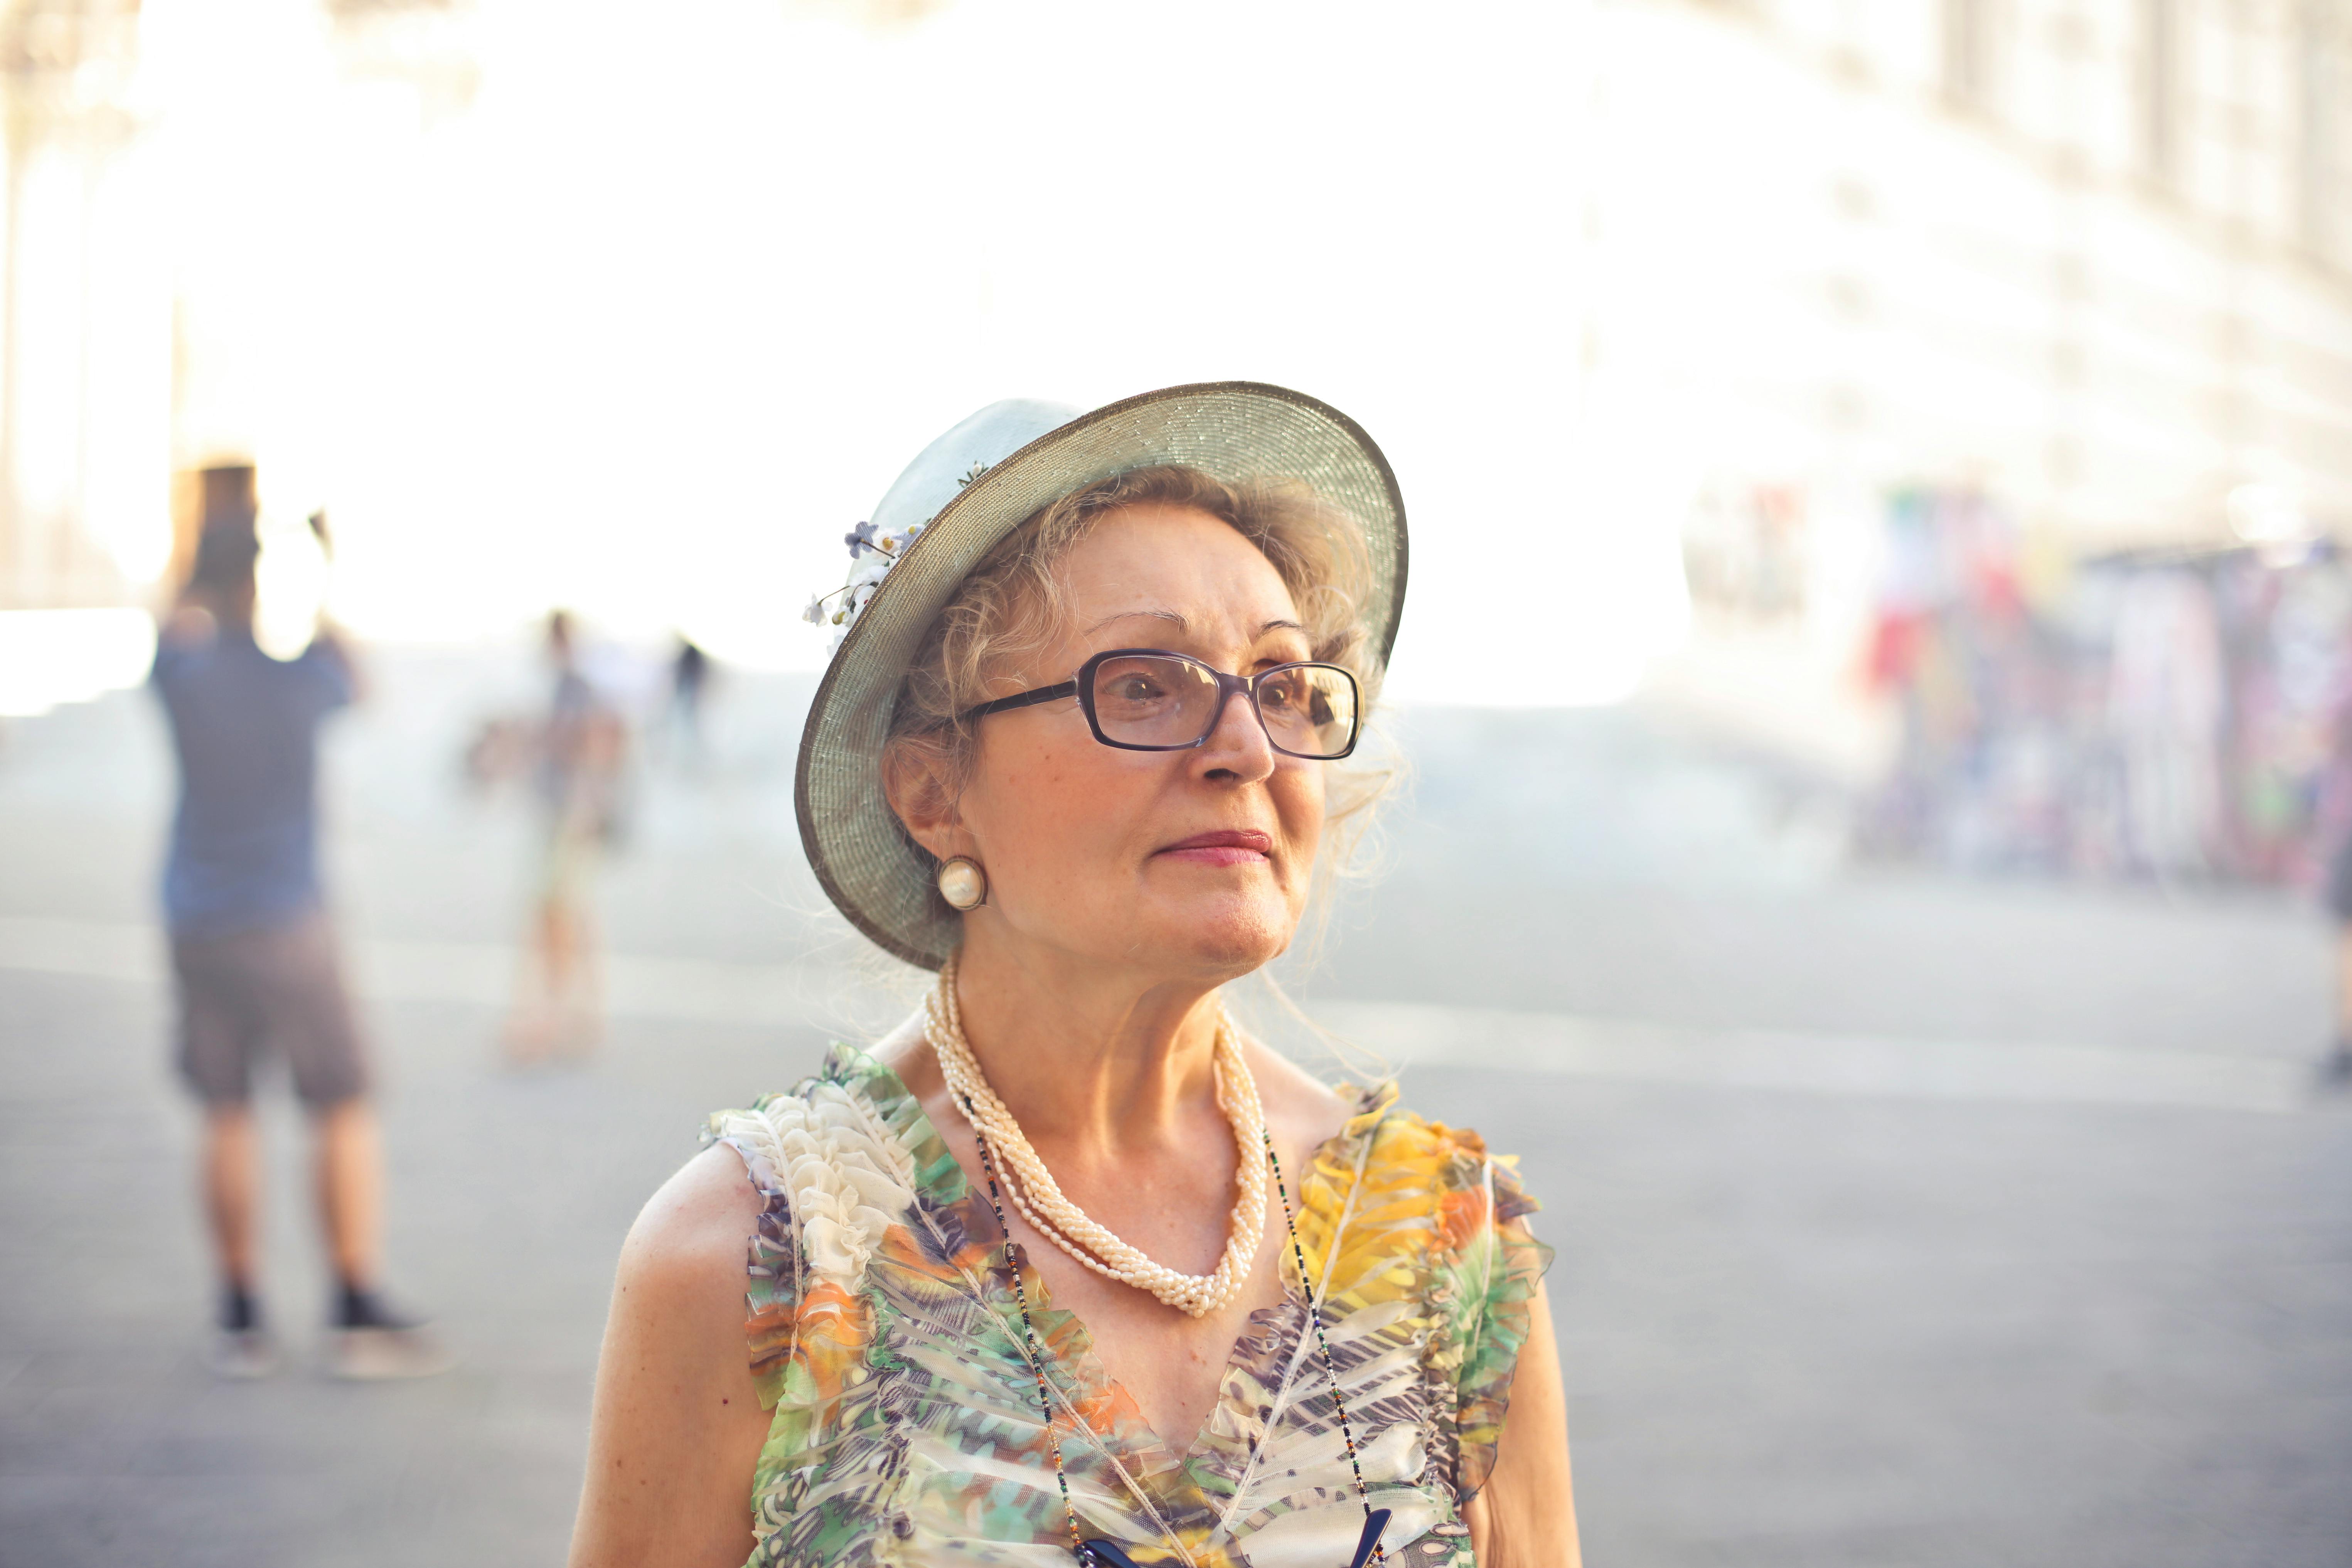 Woman wearing glasses | Source: Pexels